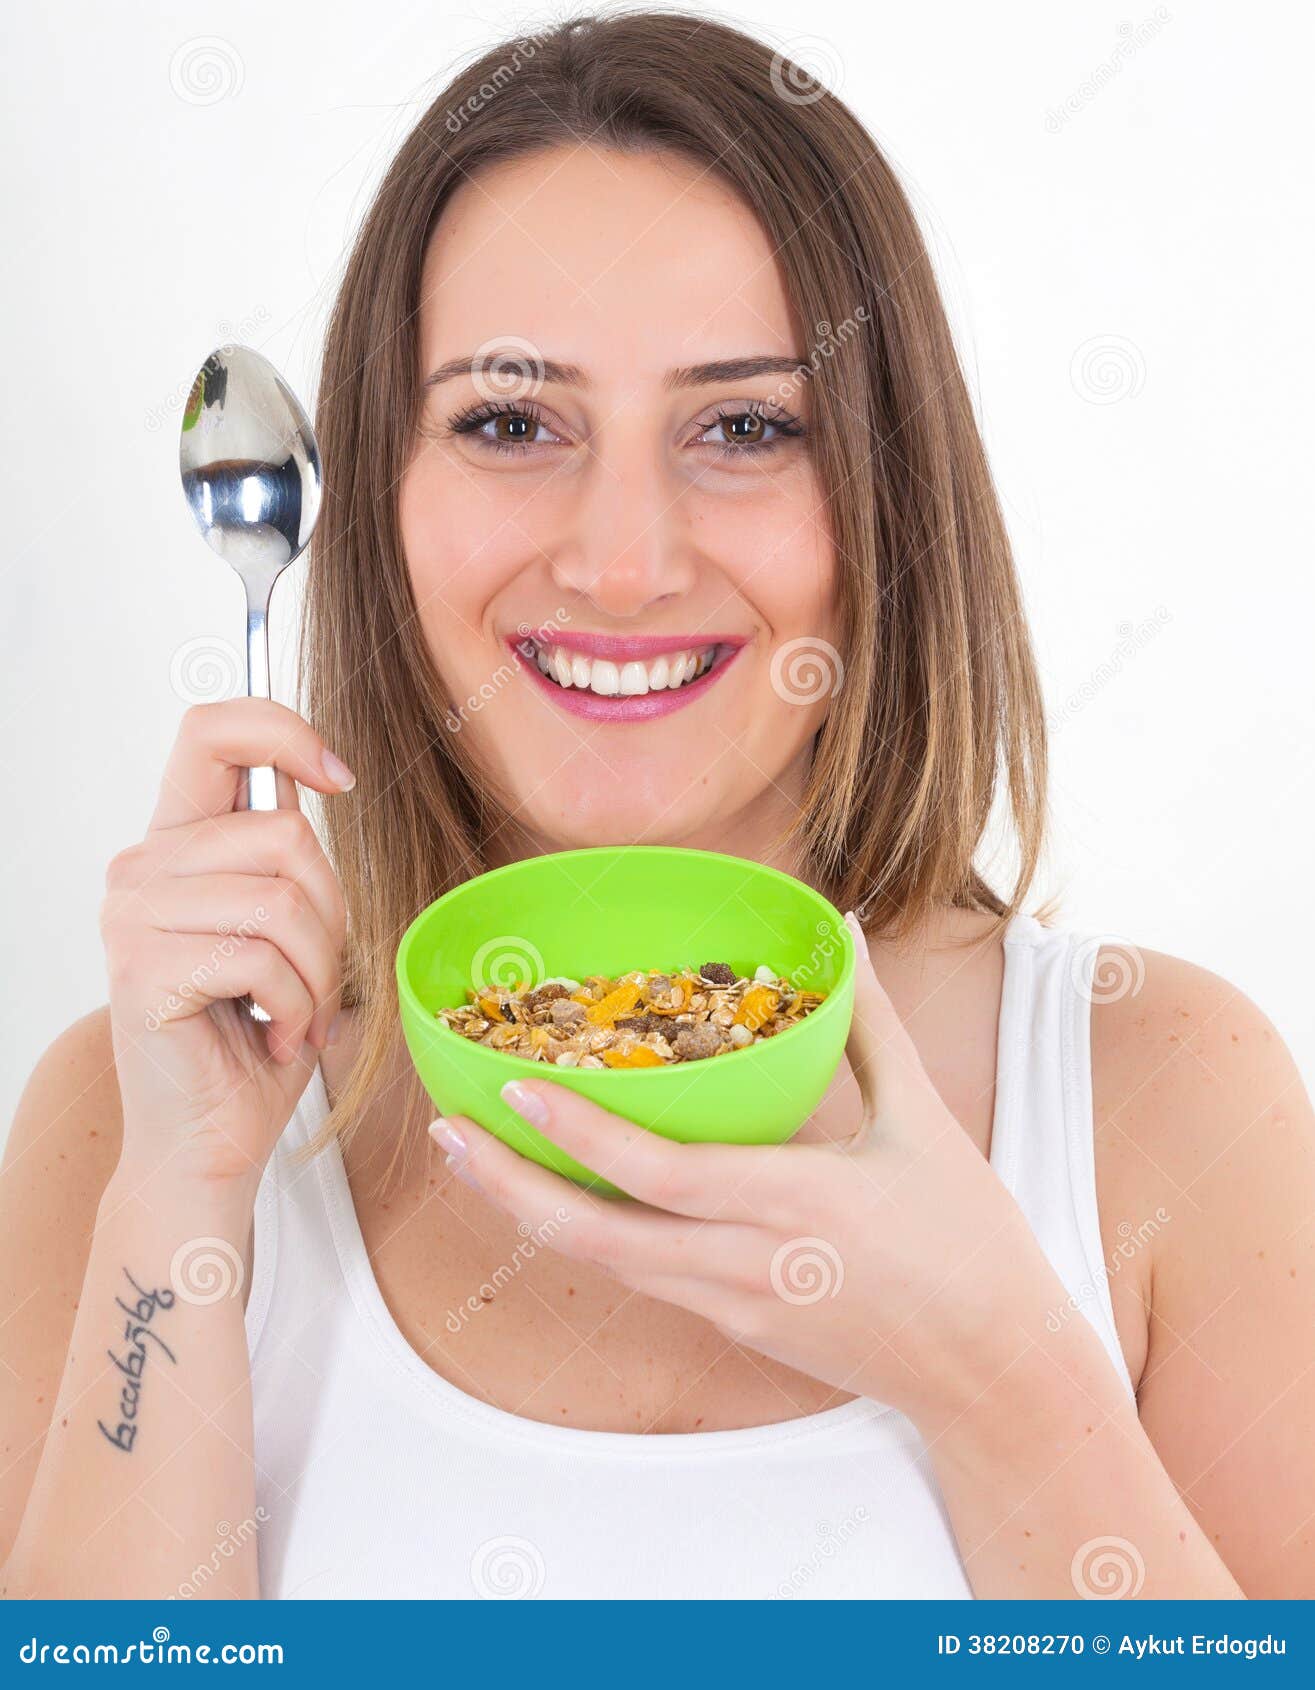 healthy-woman-eating-cereal-38208270.jpg